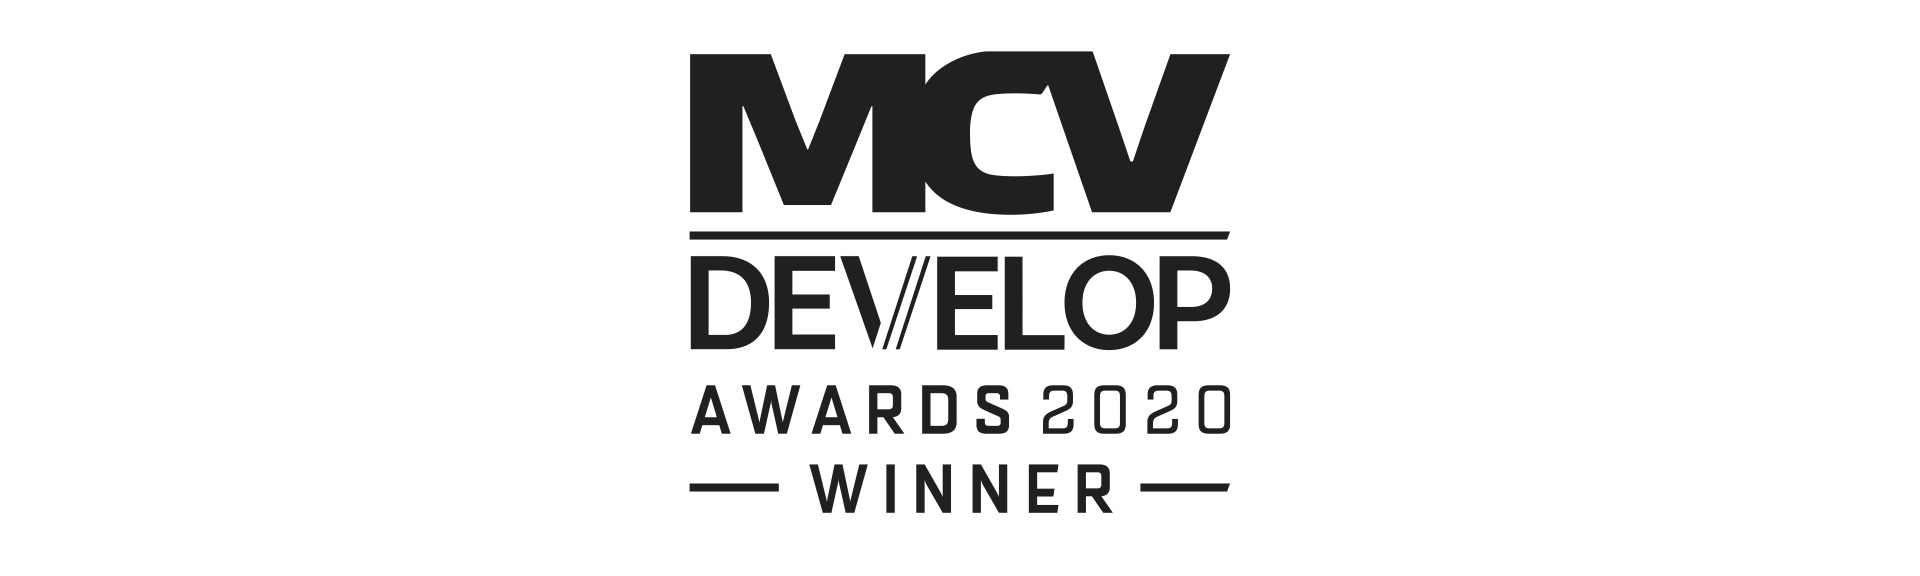 MCV Award Winner Indie Studio of the Year Hello Games